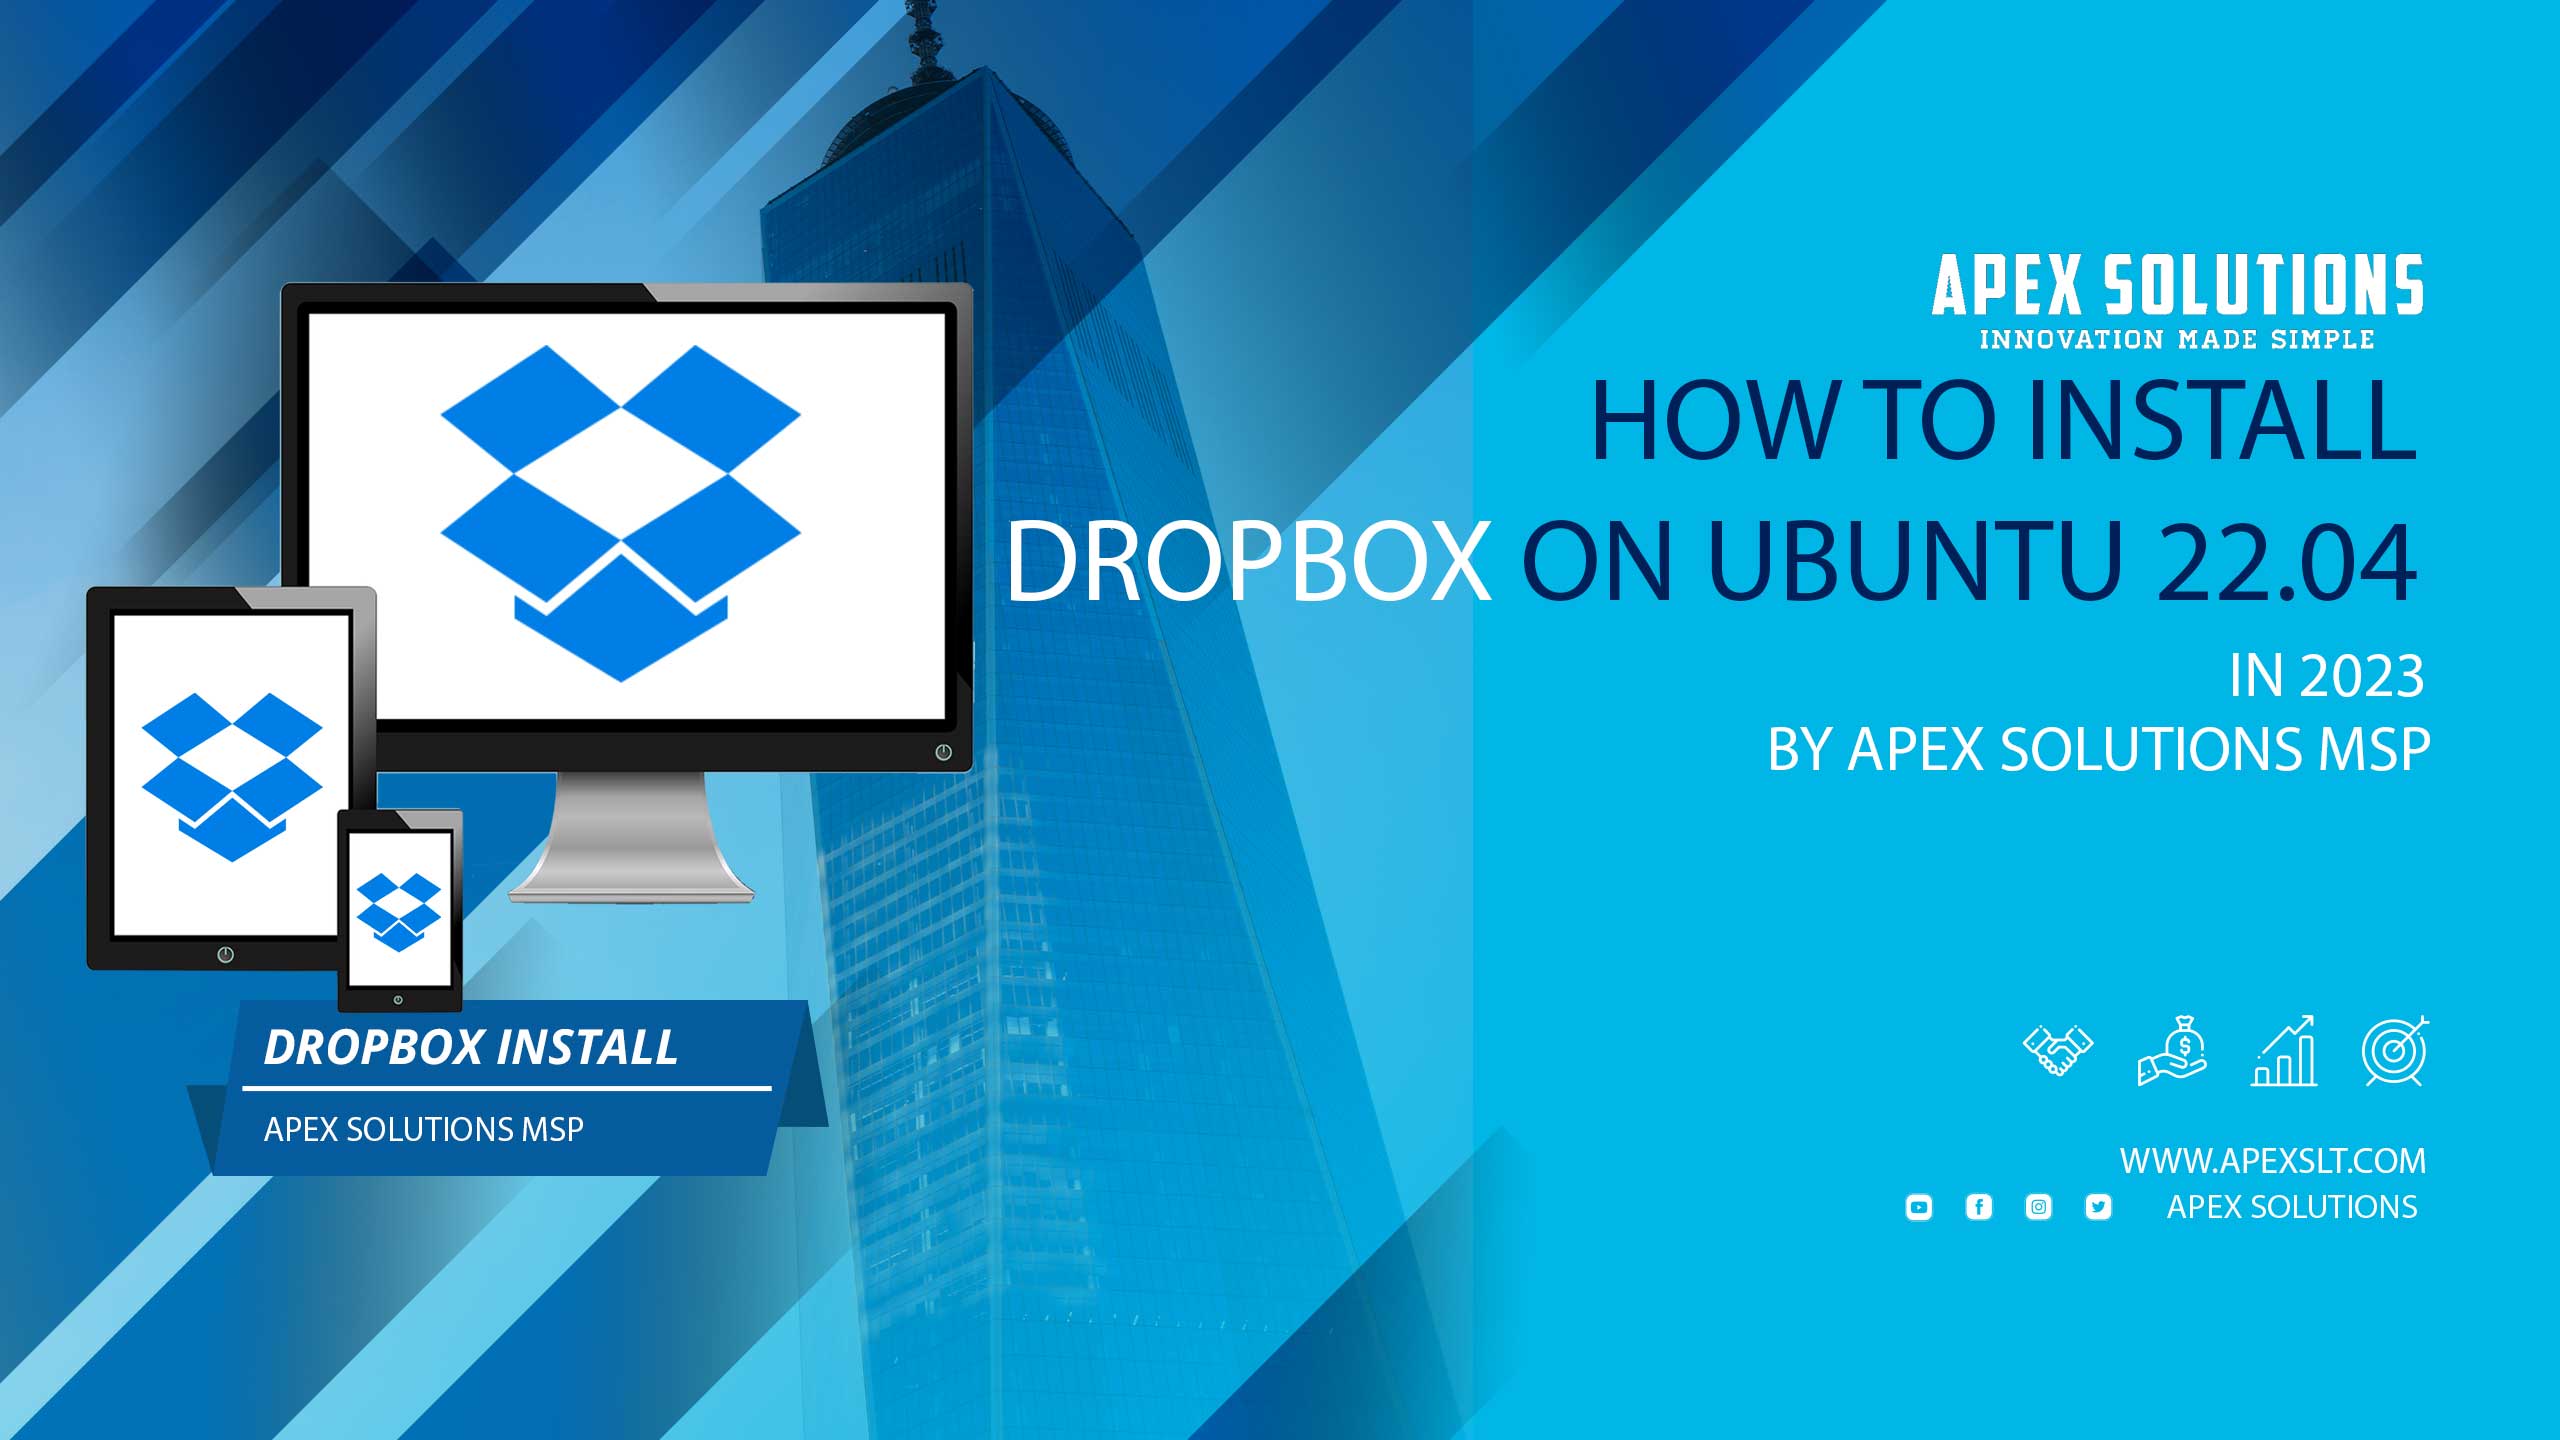 How to install dropbox on ubuntu